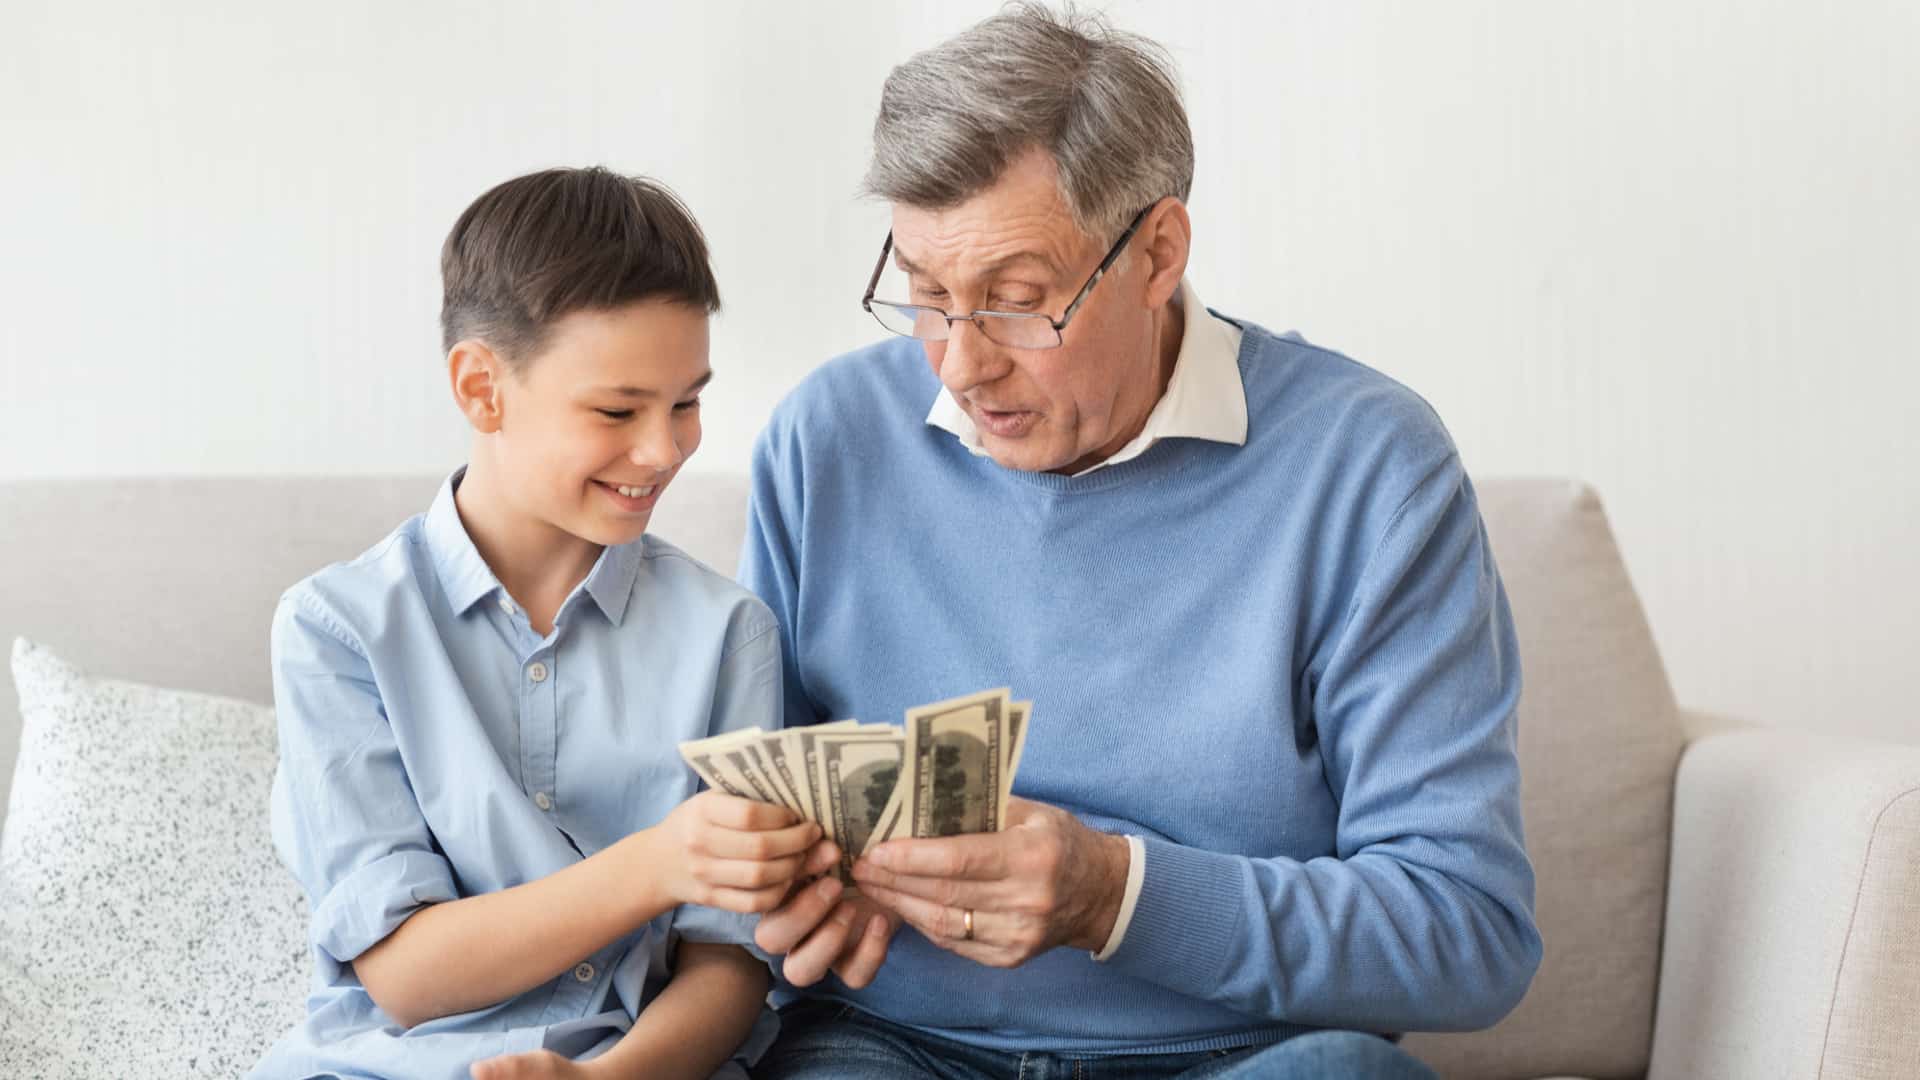 generational wealth